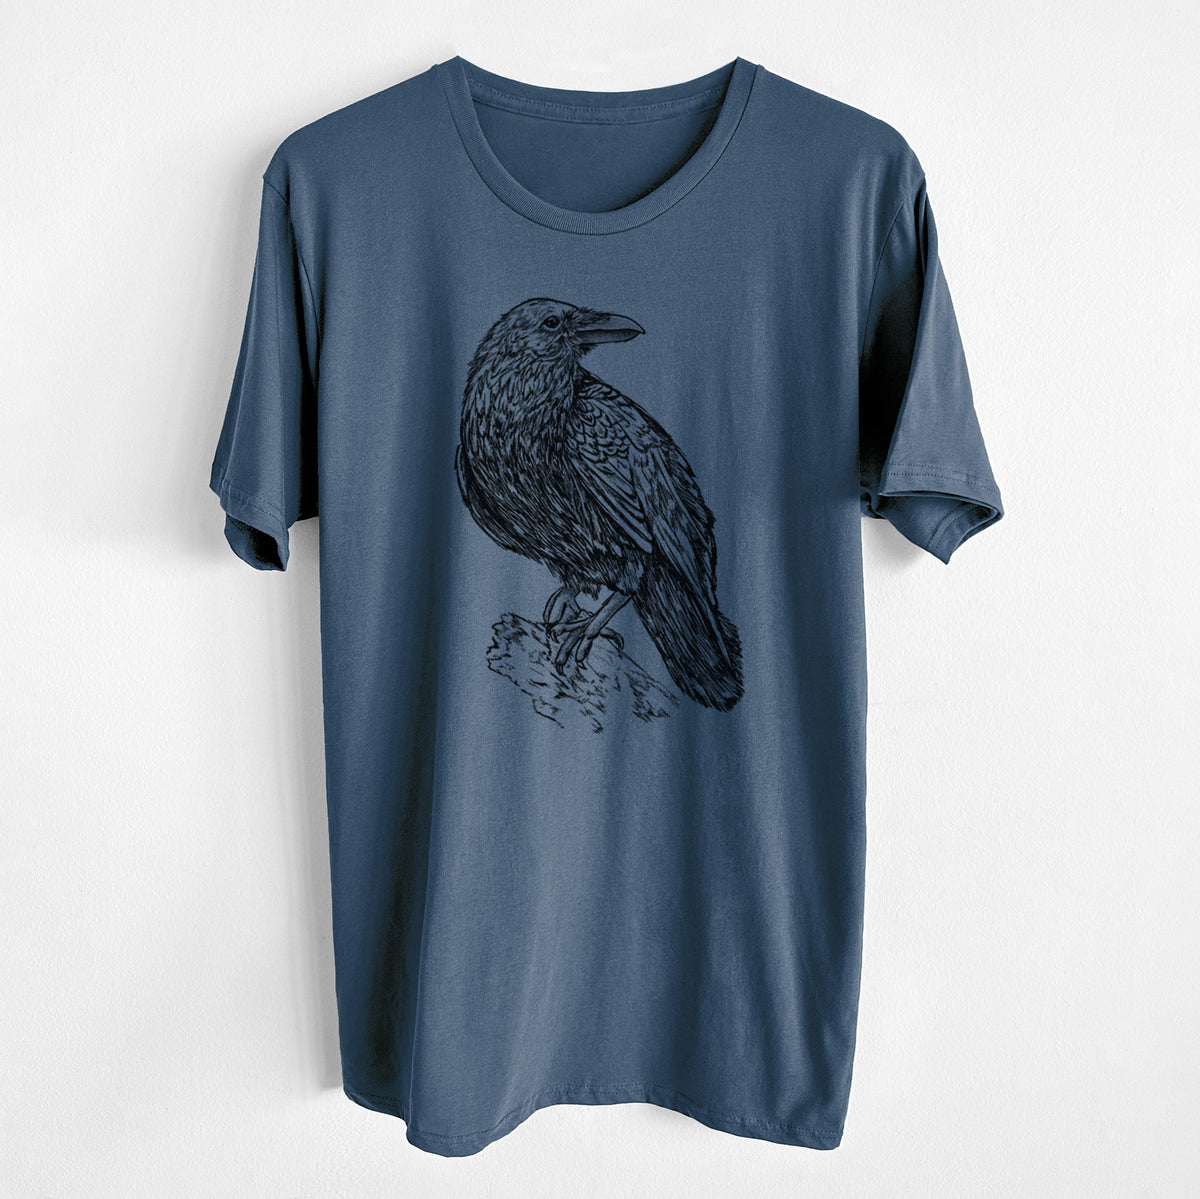 Corvus corax - Common Raven - Unisex Crewneck - Made in USA - 100% Organic Cotton